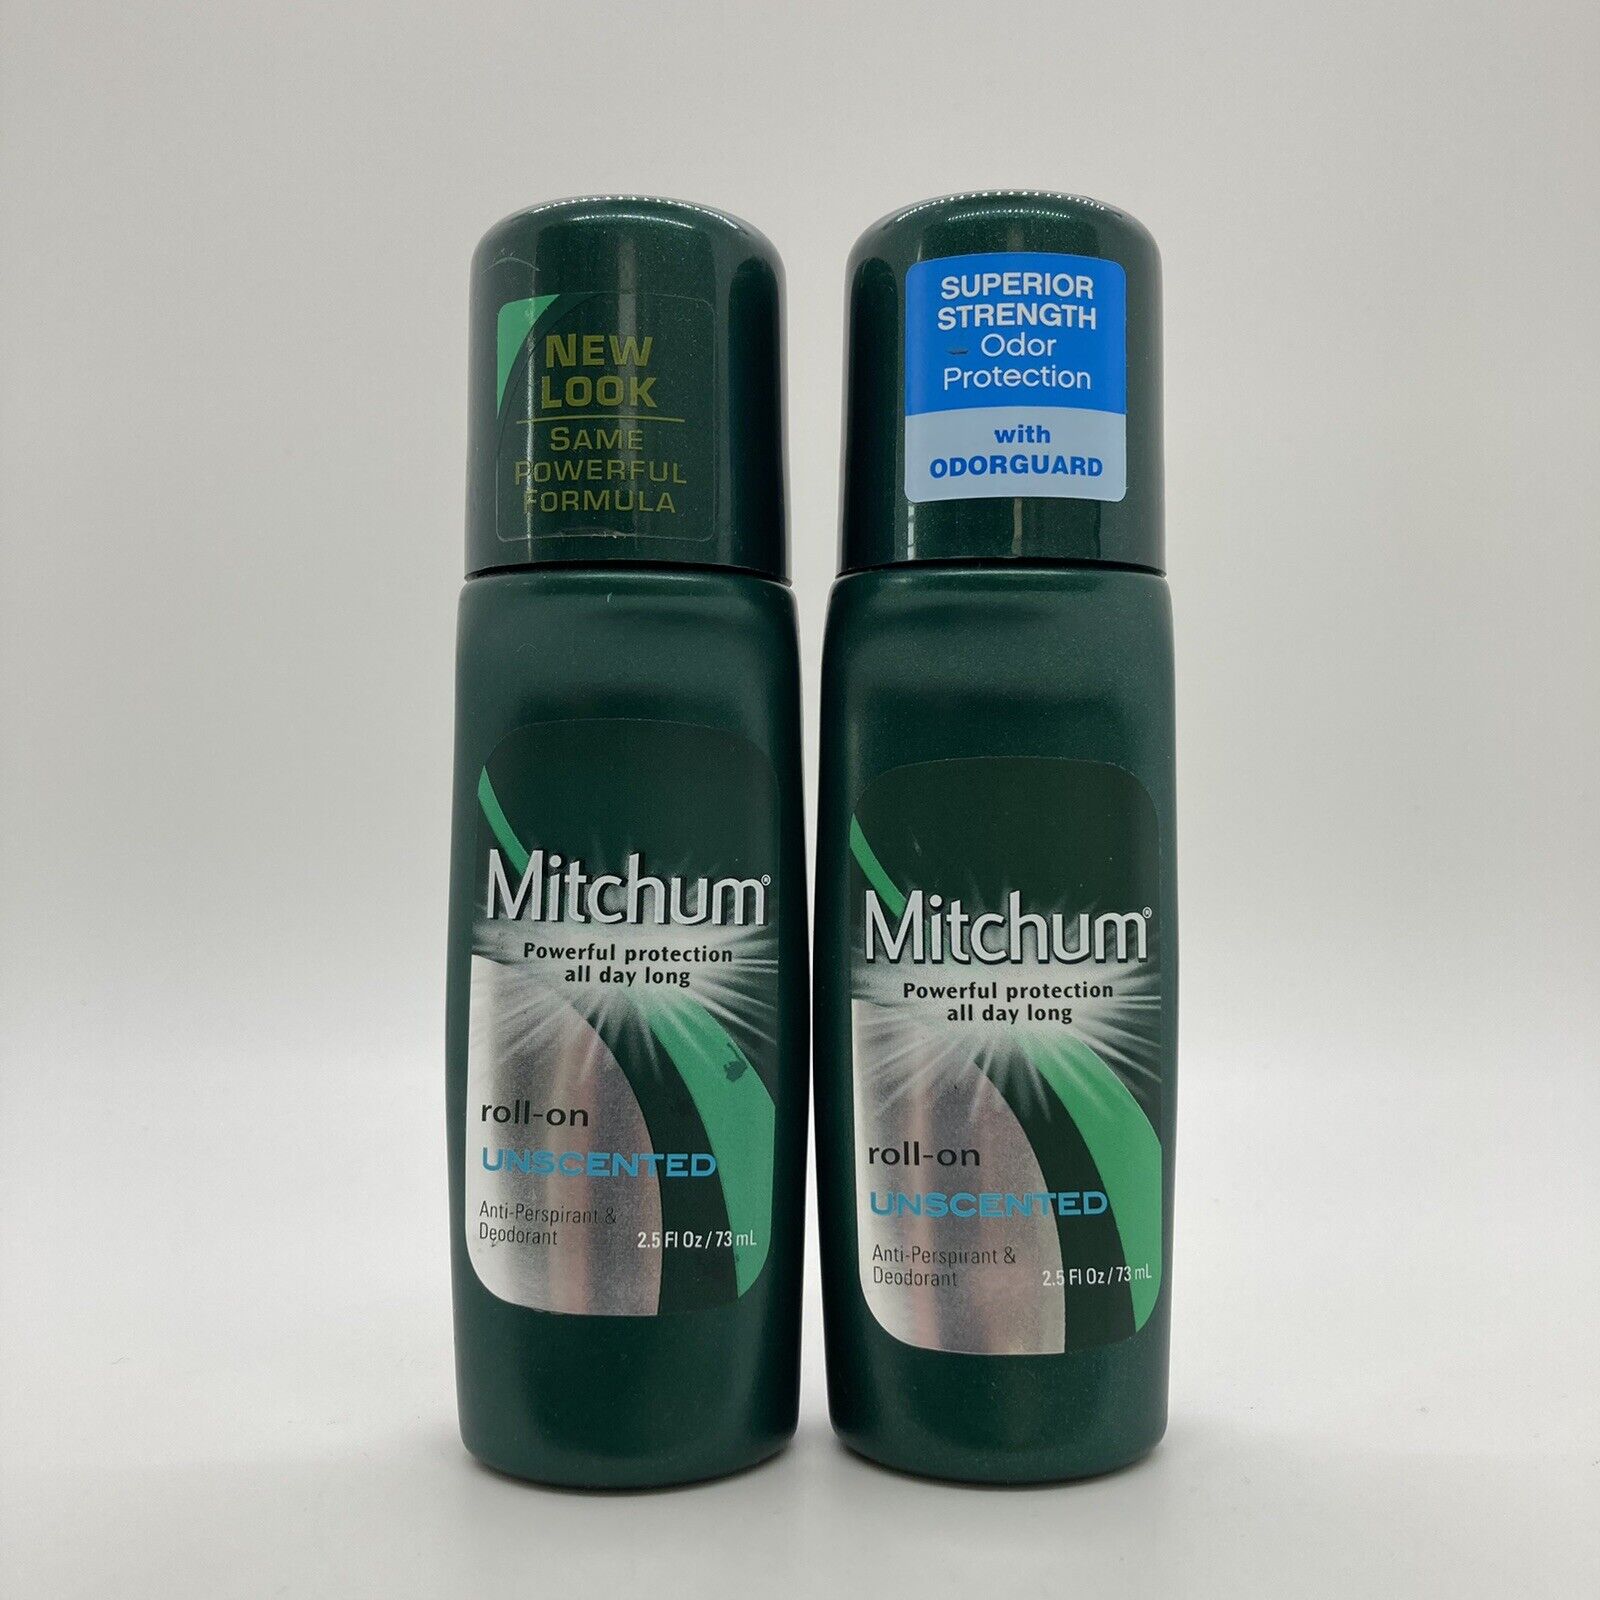 2x Mitchum Roll-On Unscented Antiperspirant Deodorant Original, 2.5 fl oz each